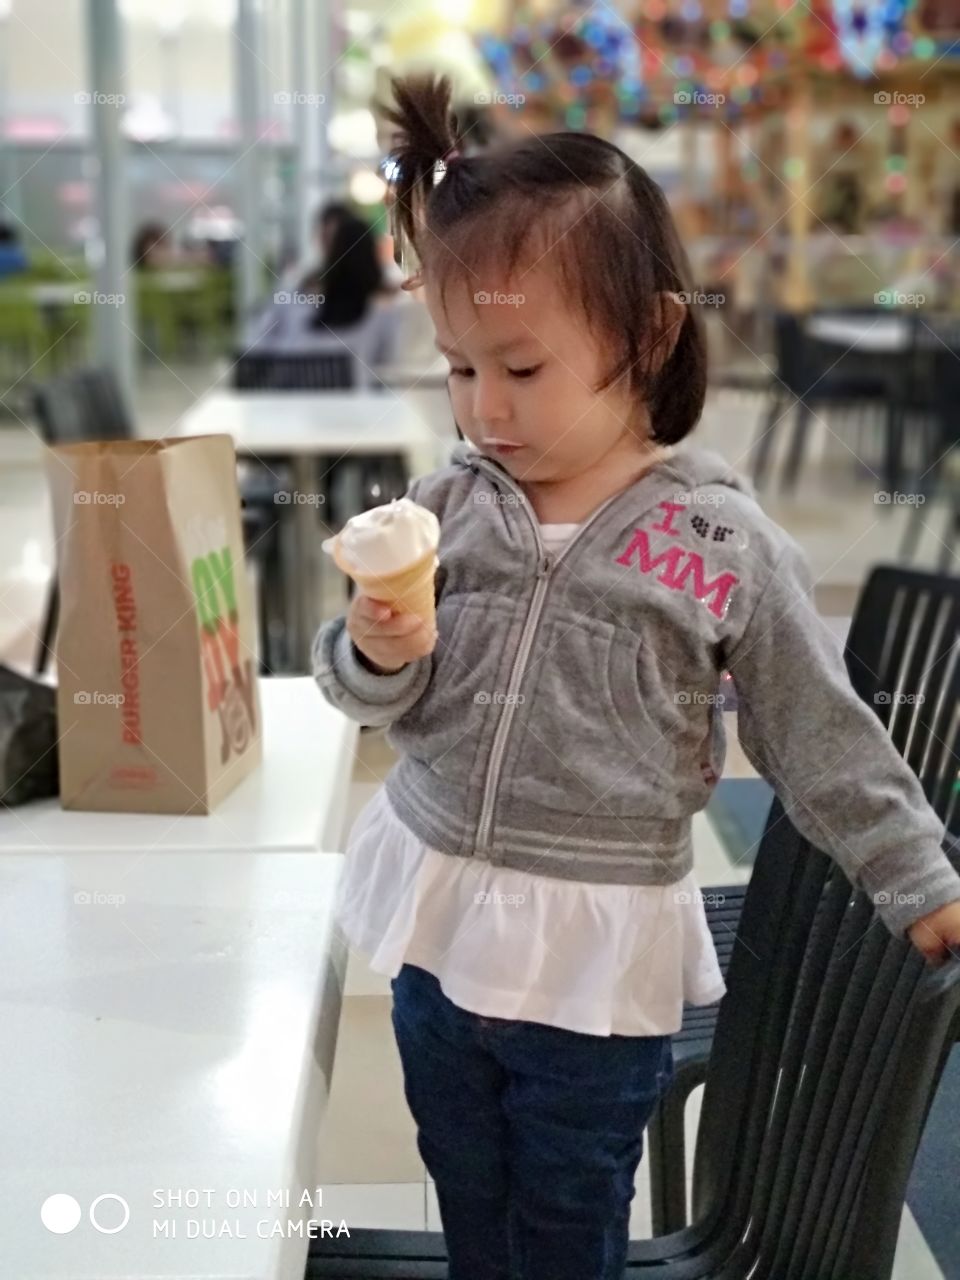 Wish a ice cream